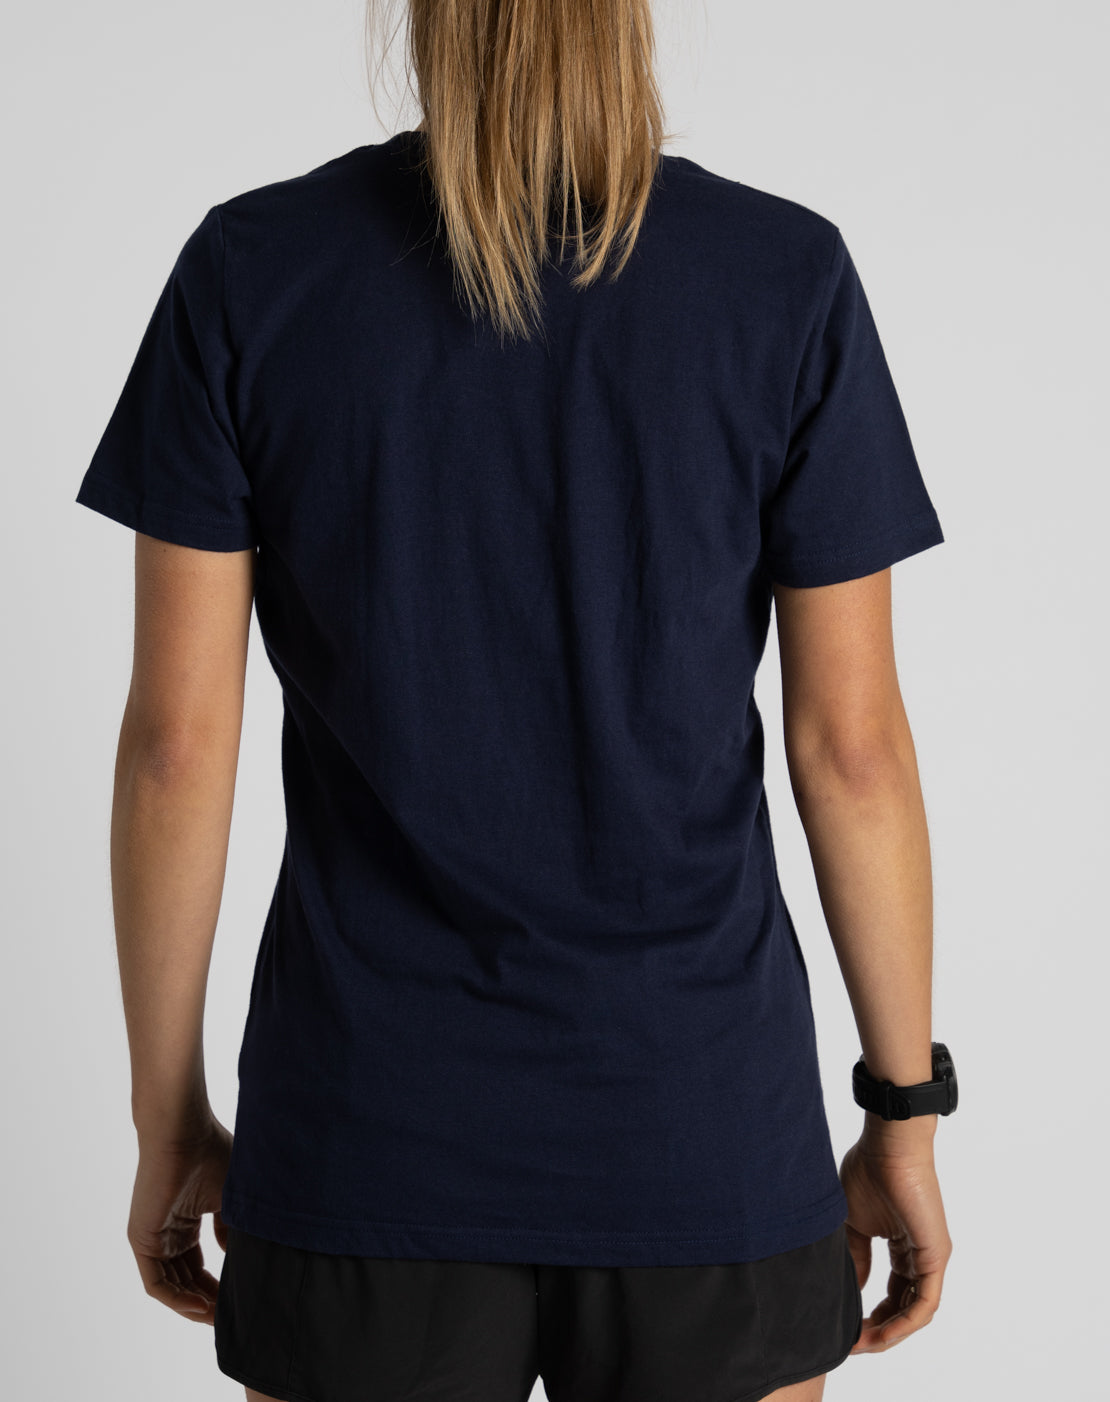 Willpower "Straight Edge" Athleisure T-Shirt (Ltd. Navy)